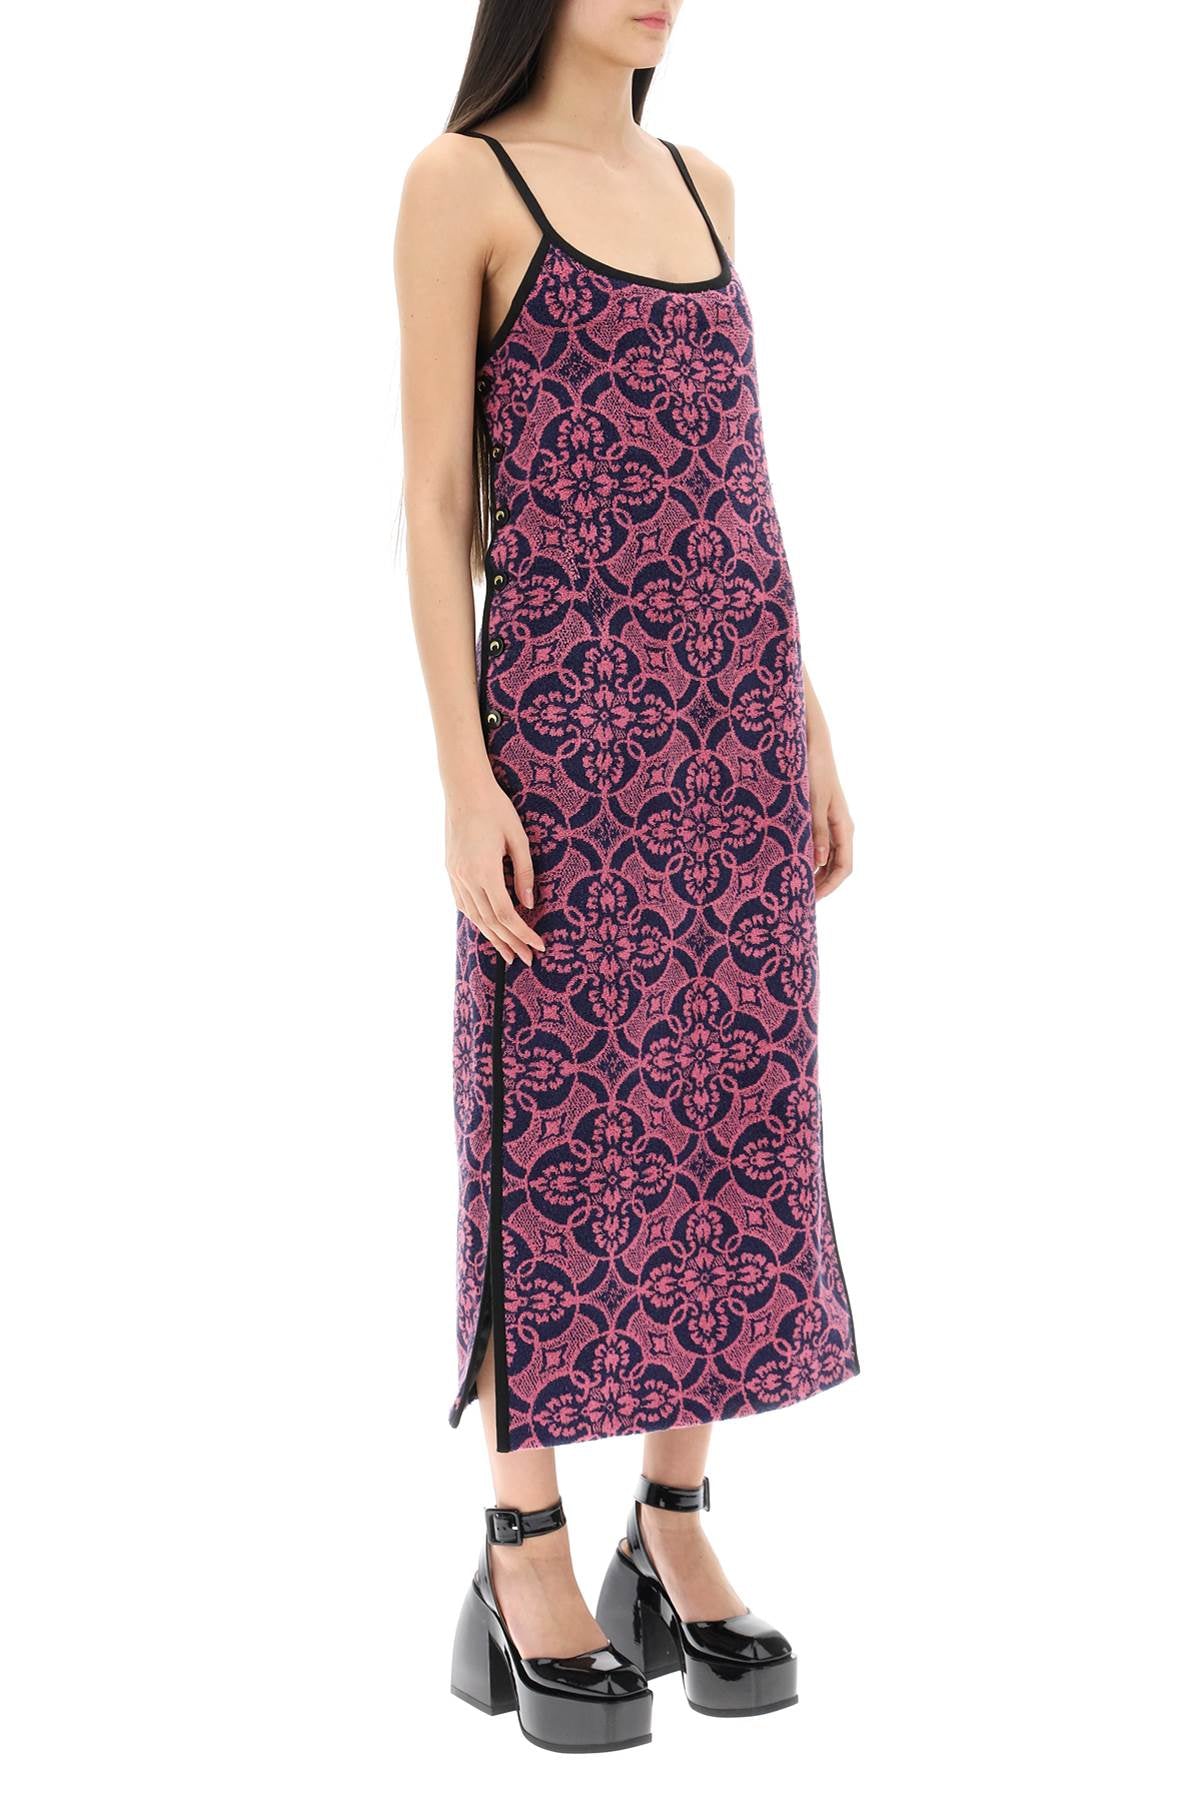 MARINE SERRE Oriental Towel Print Midi Dress in Soft Cotton Terry